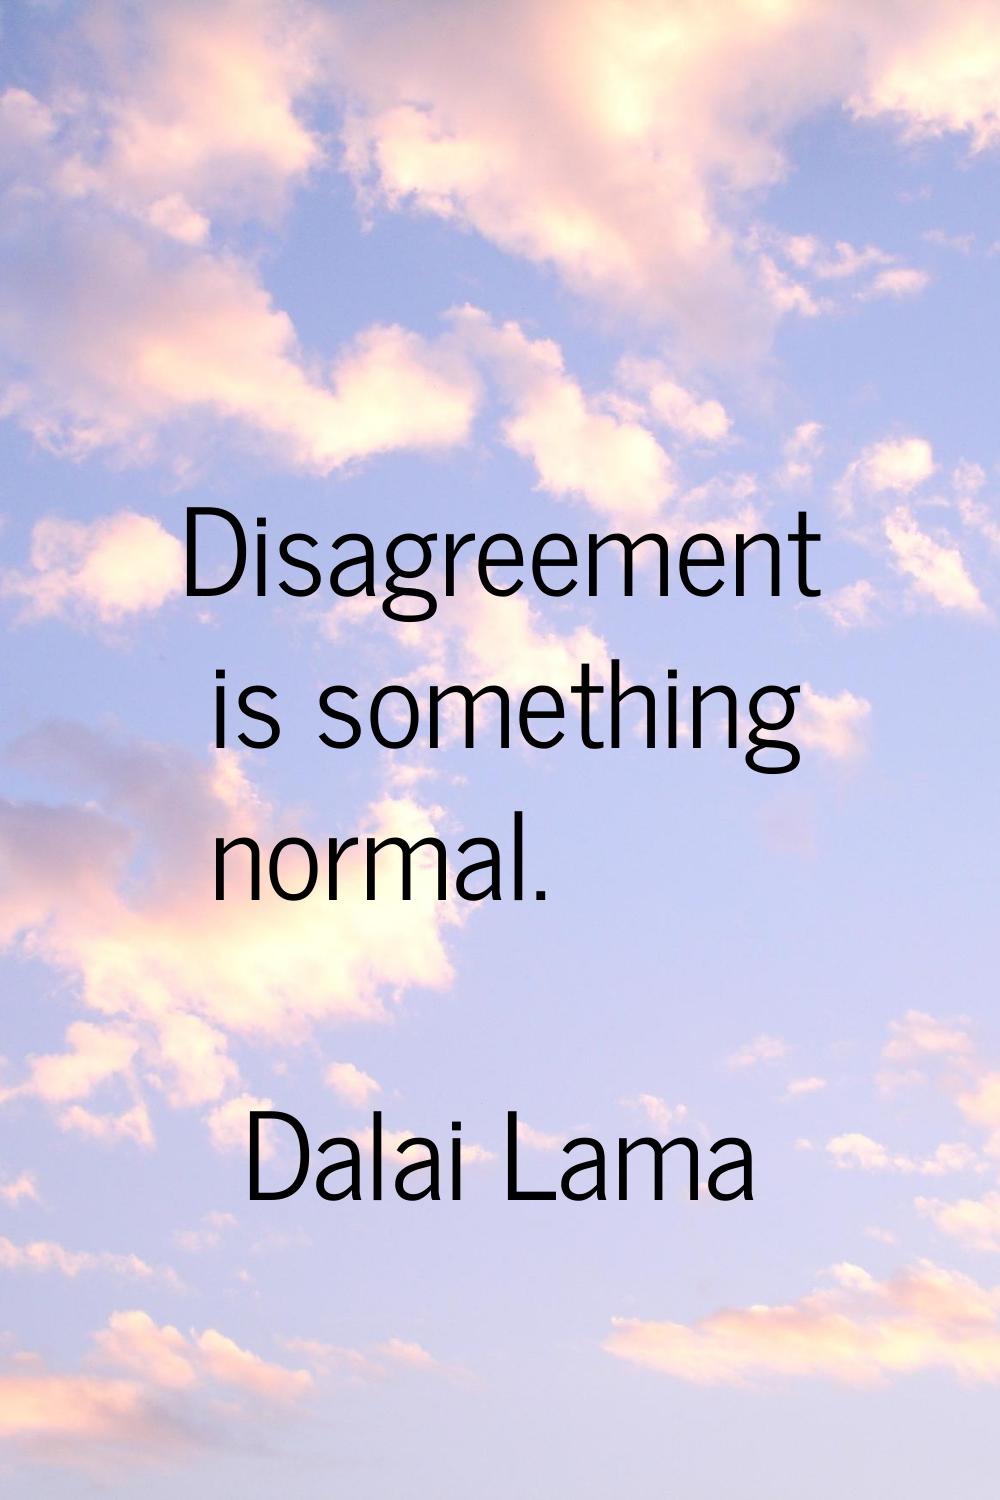 Disagreement is something normal.